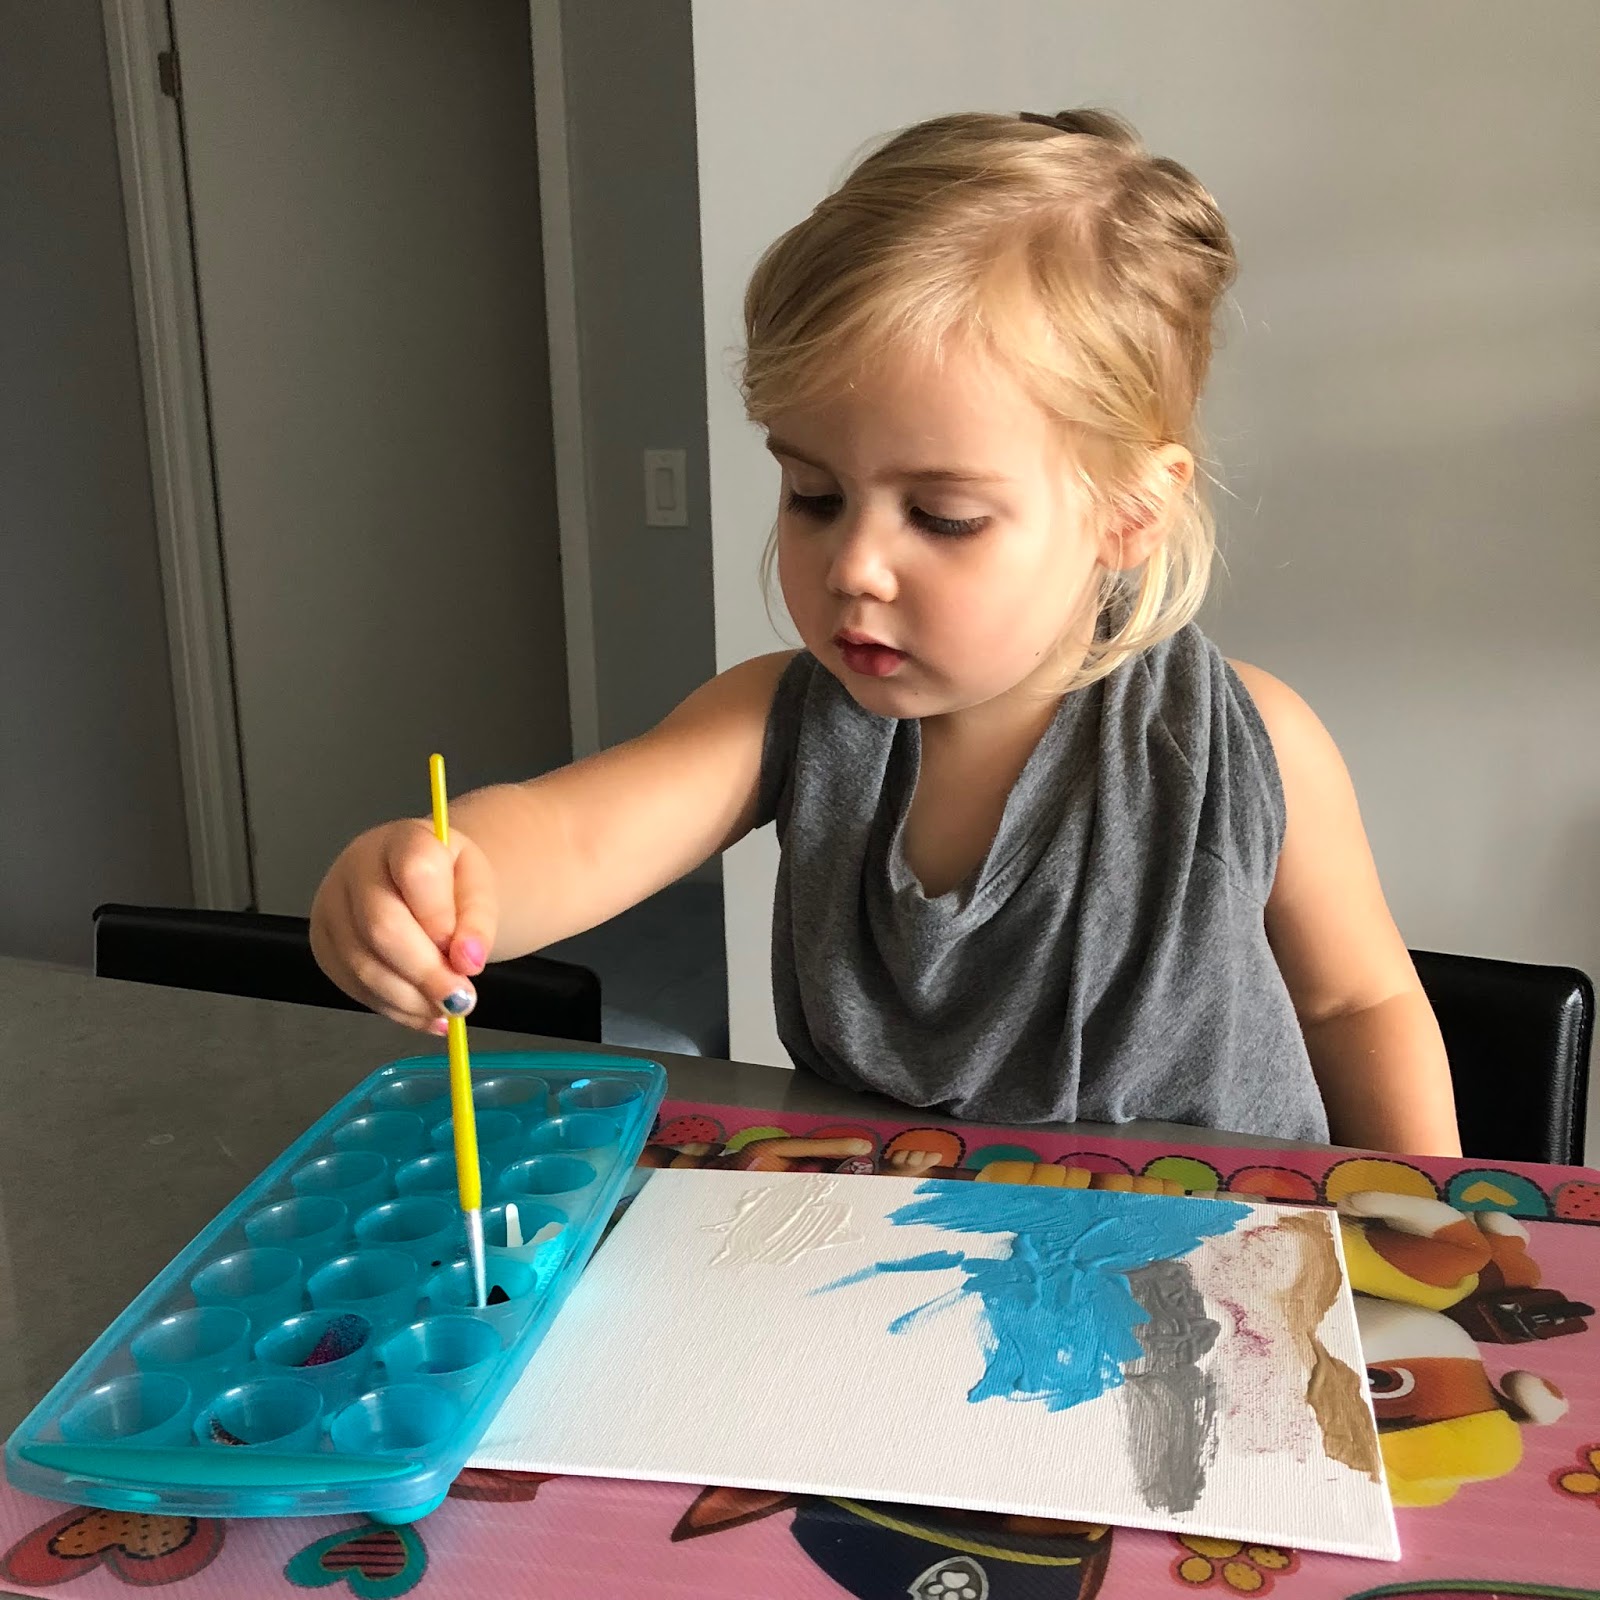 Easy At Home Preschooler Paint Station Plus Painting Smock DIY